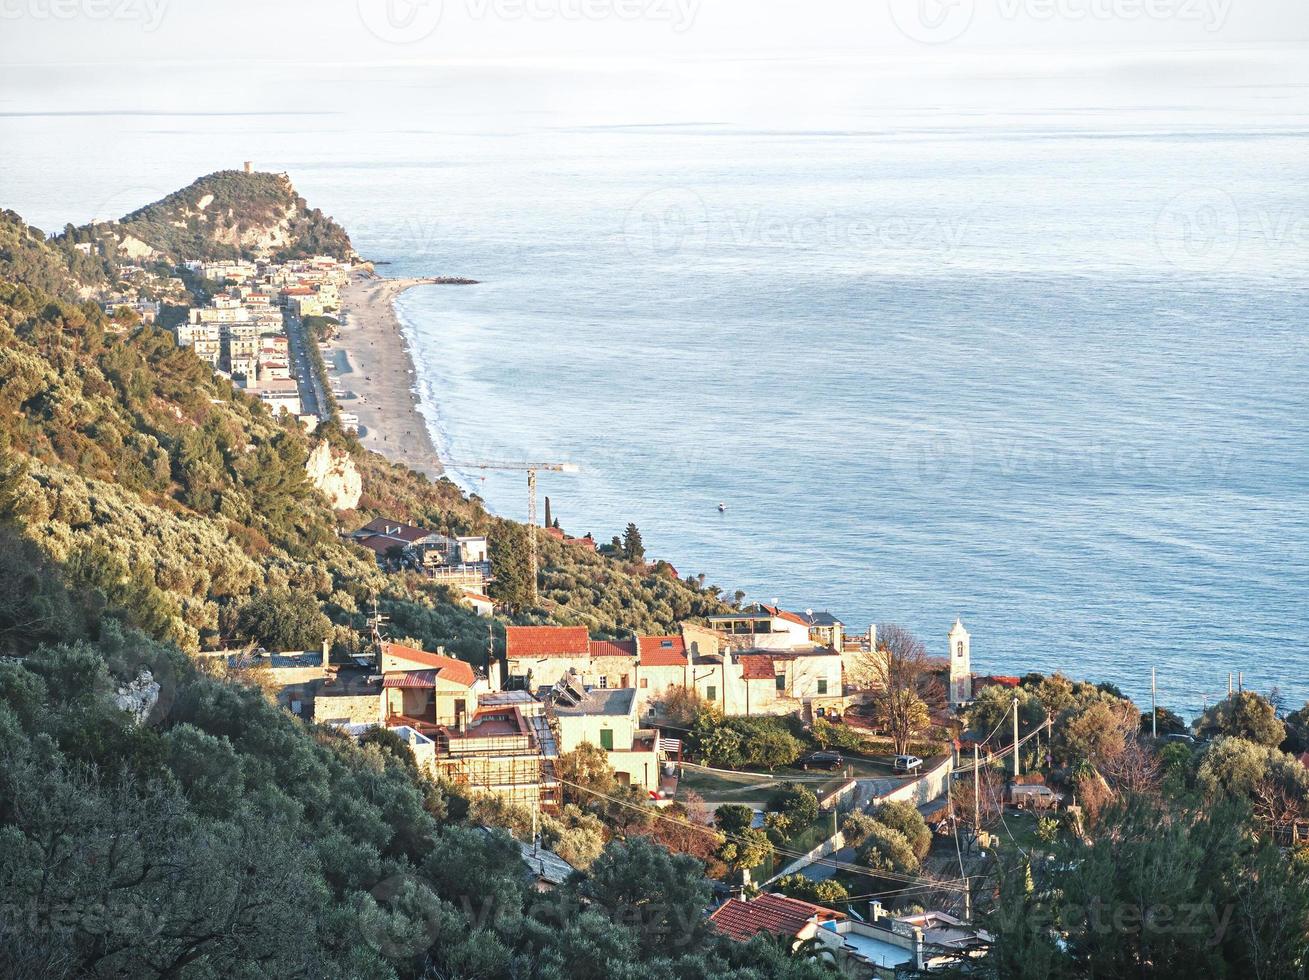 paysage de la côte ligurienne de varigotti, reportage de voyage en italie photo